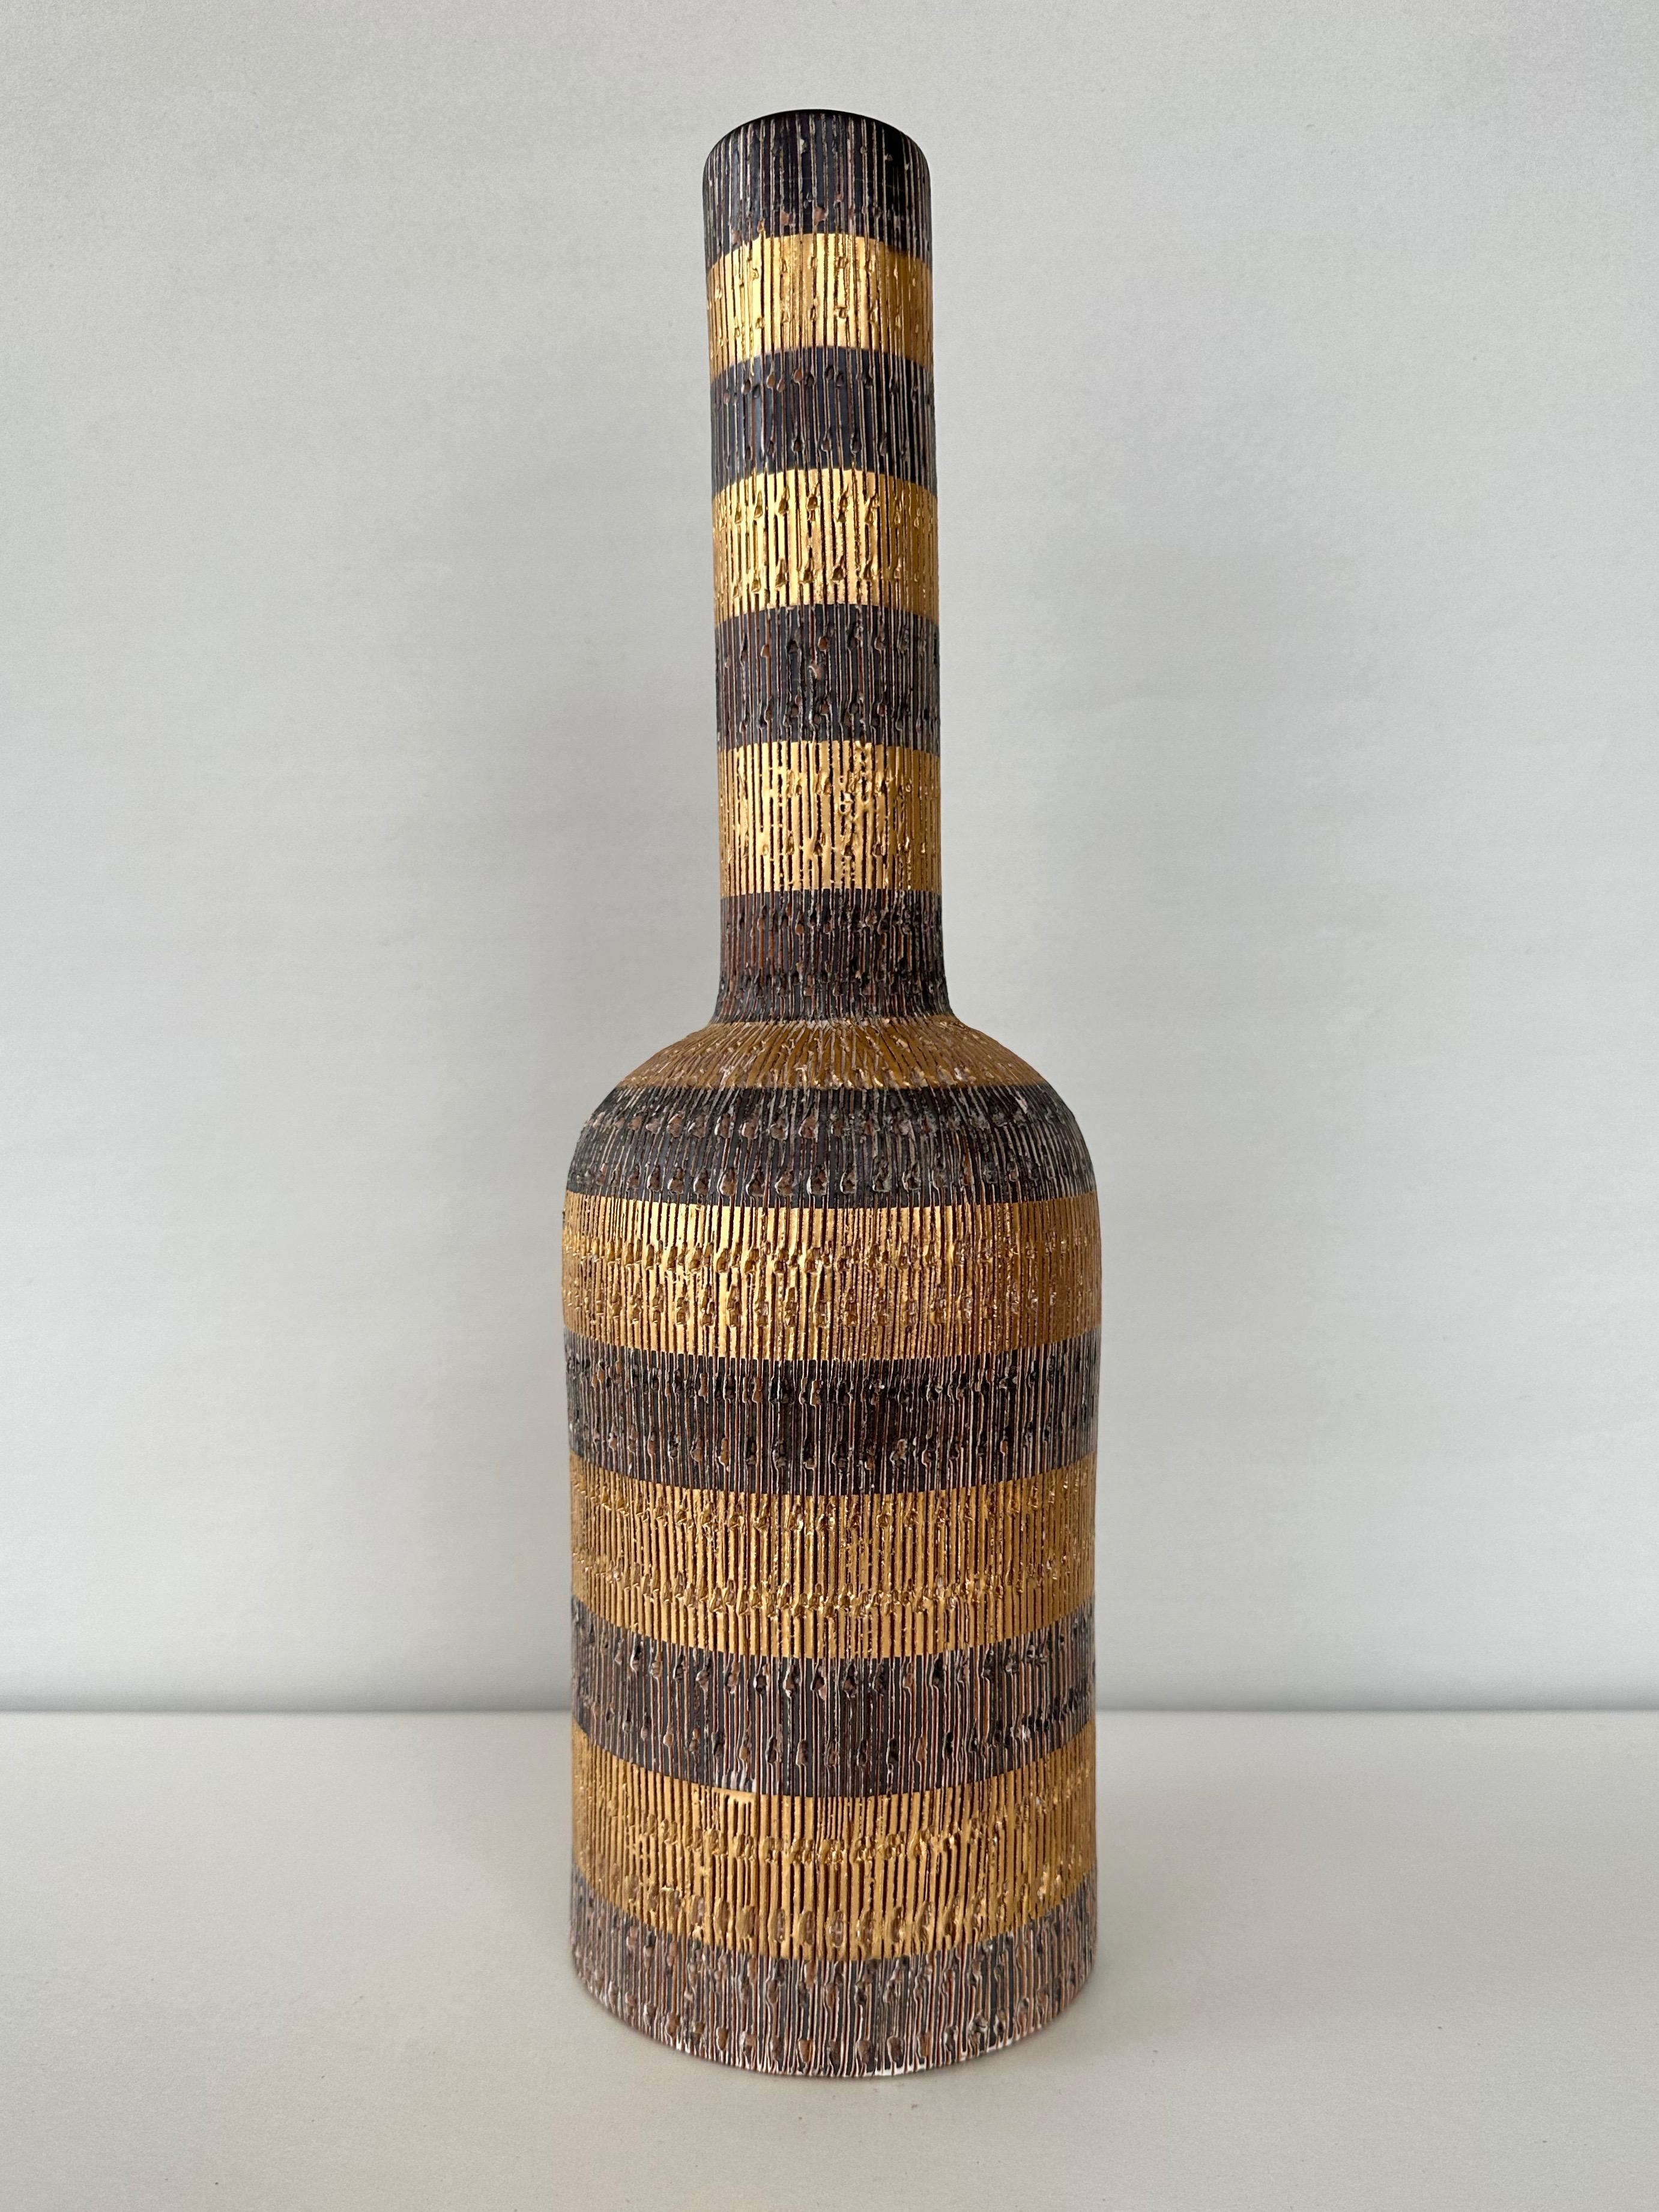 Aldo Londi for Bitossi via Raymor Seta Glazed Incised Pottery Bottle Vase, 1950s 6